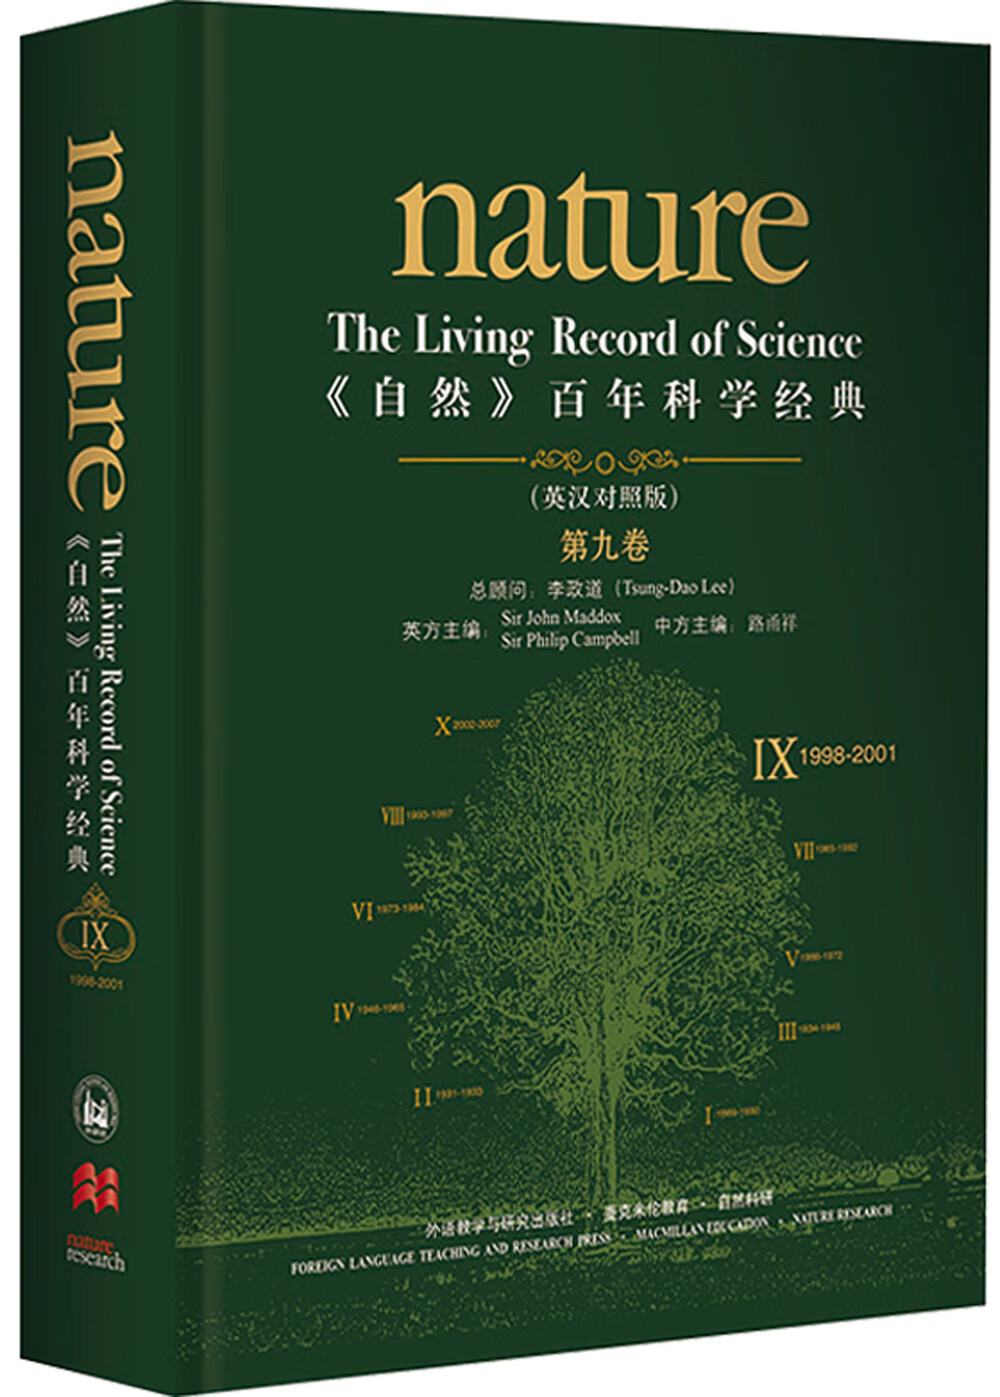 《nature自然》百年科学经典第九卷 1998-2001（英汉对照 精装版）